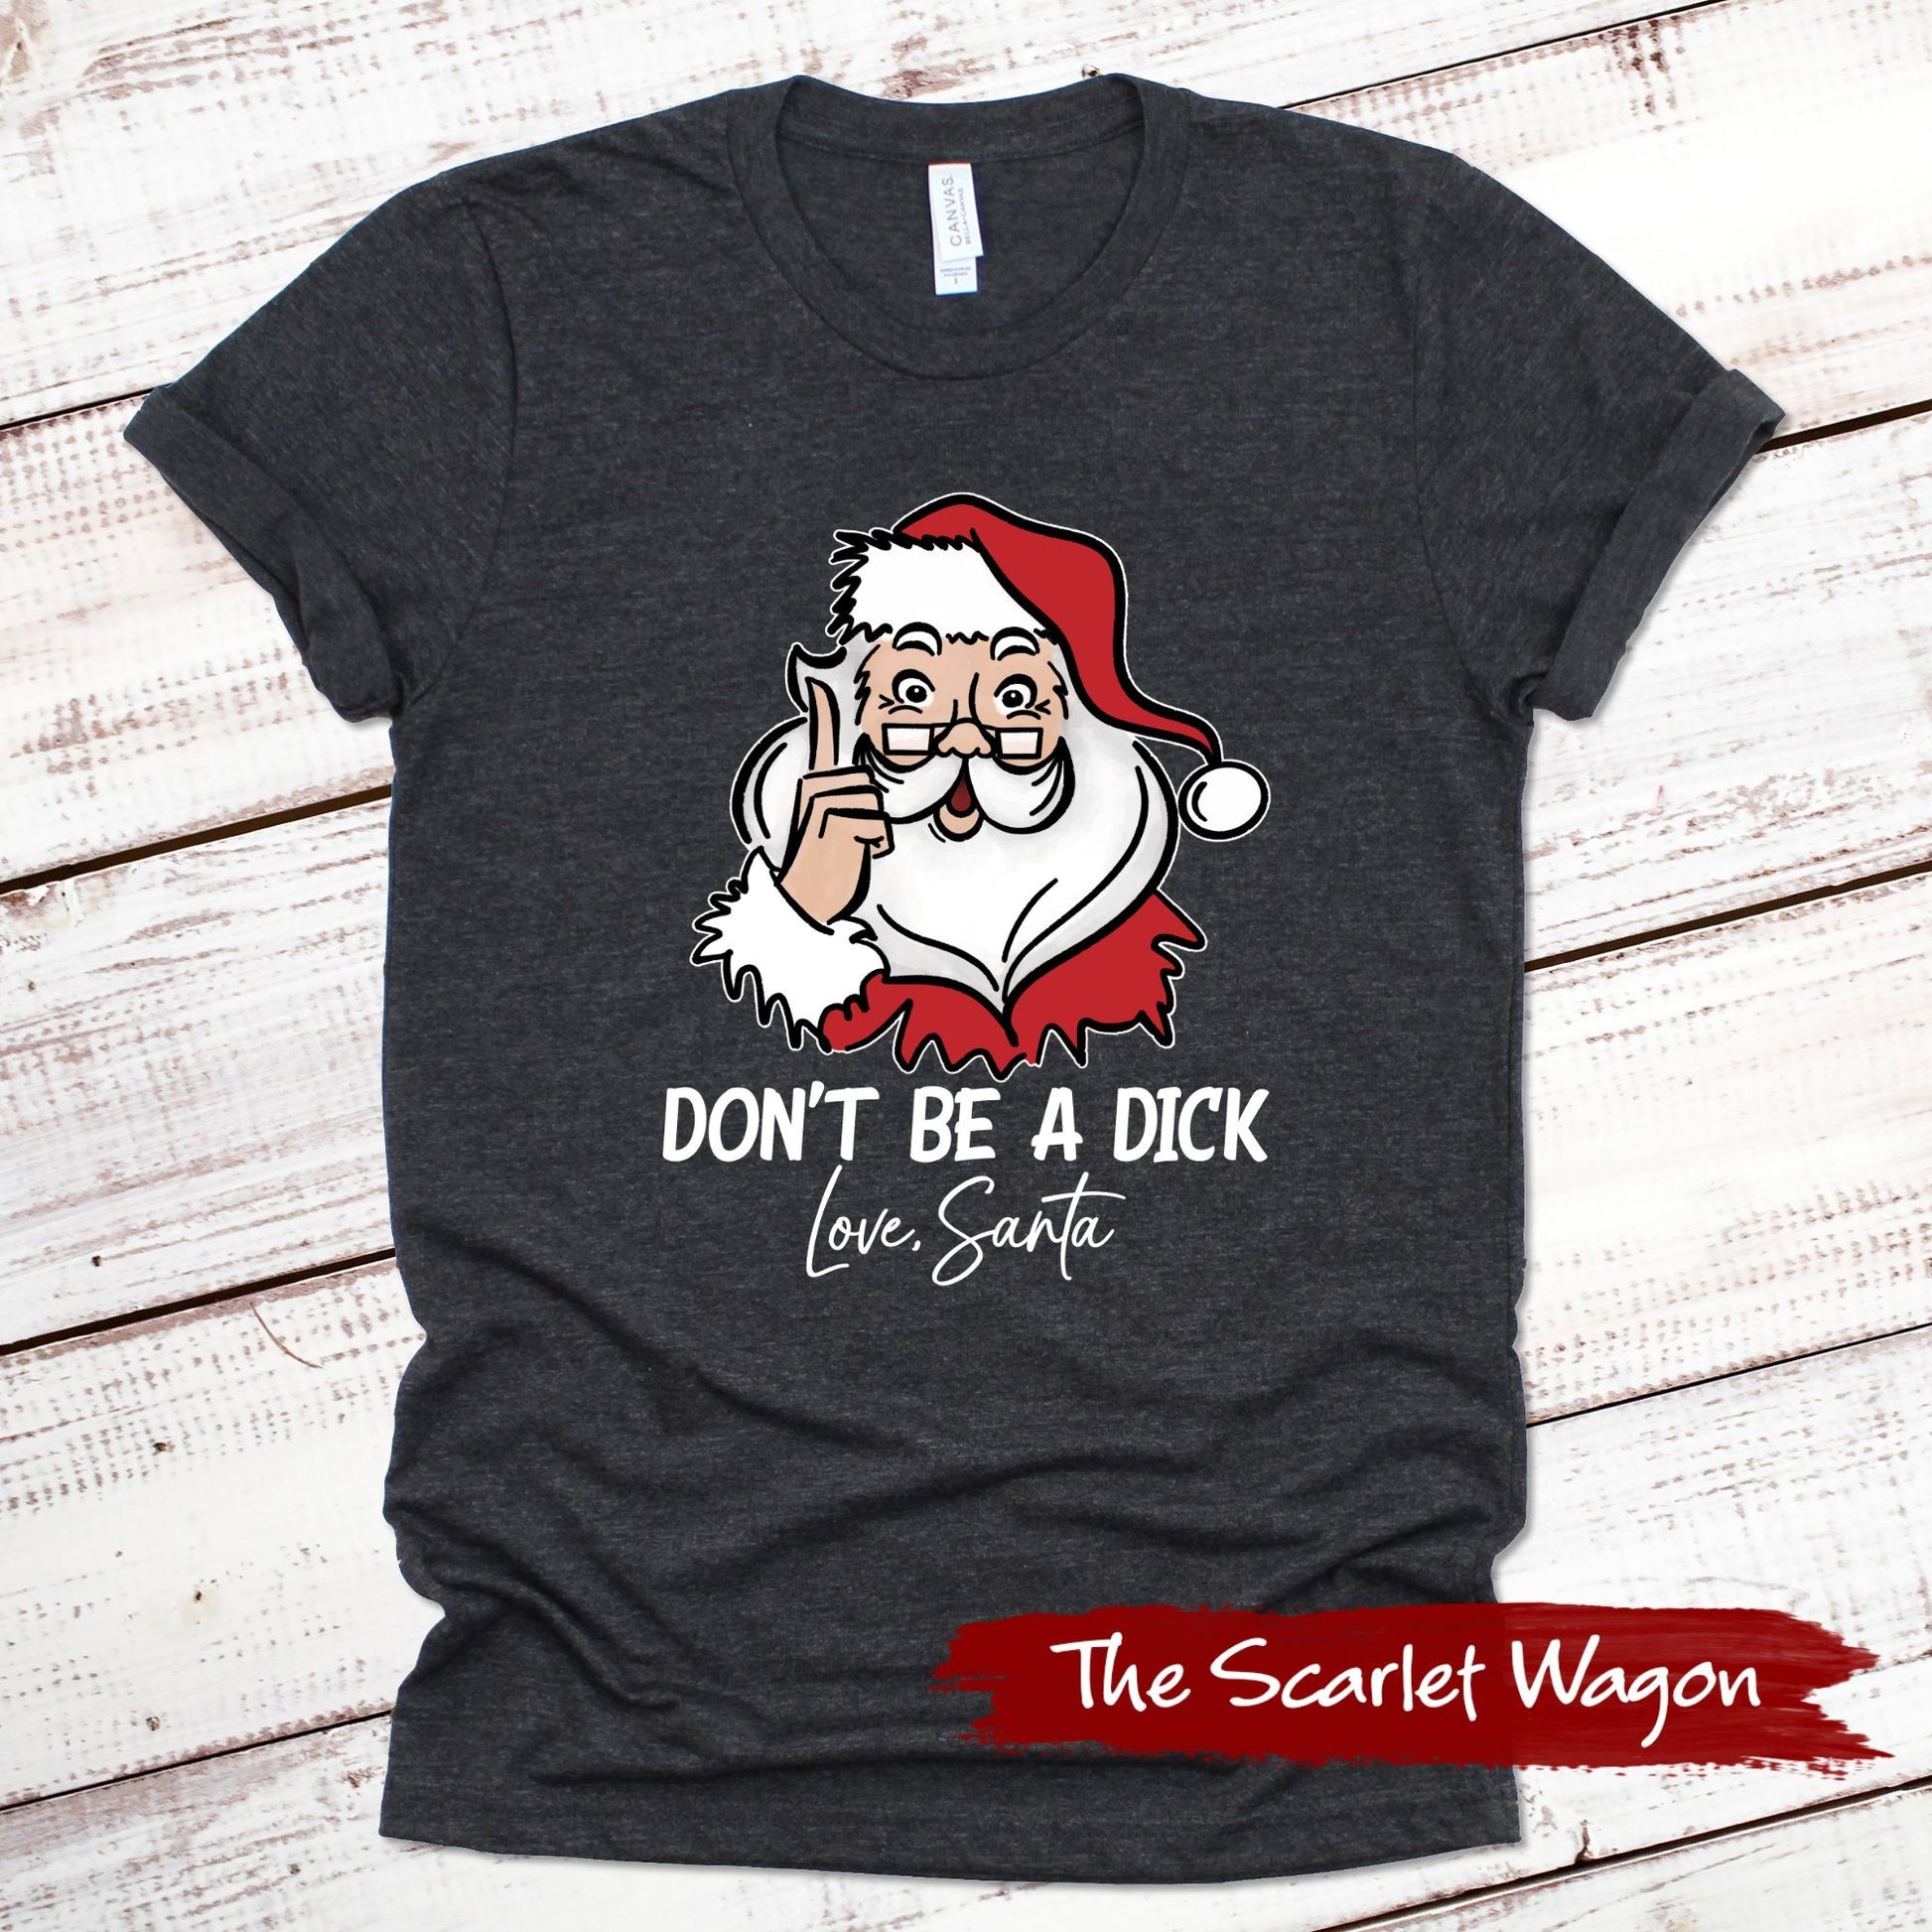 Don't Be a Dick - Love, Santa Christmas Shirt Scarlet Wagon Dark Gray Heather XS 